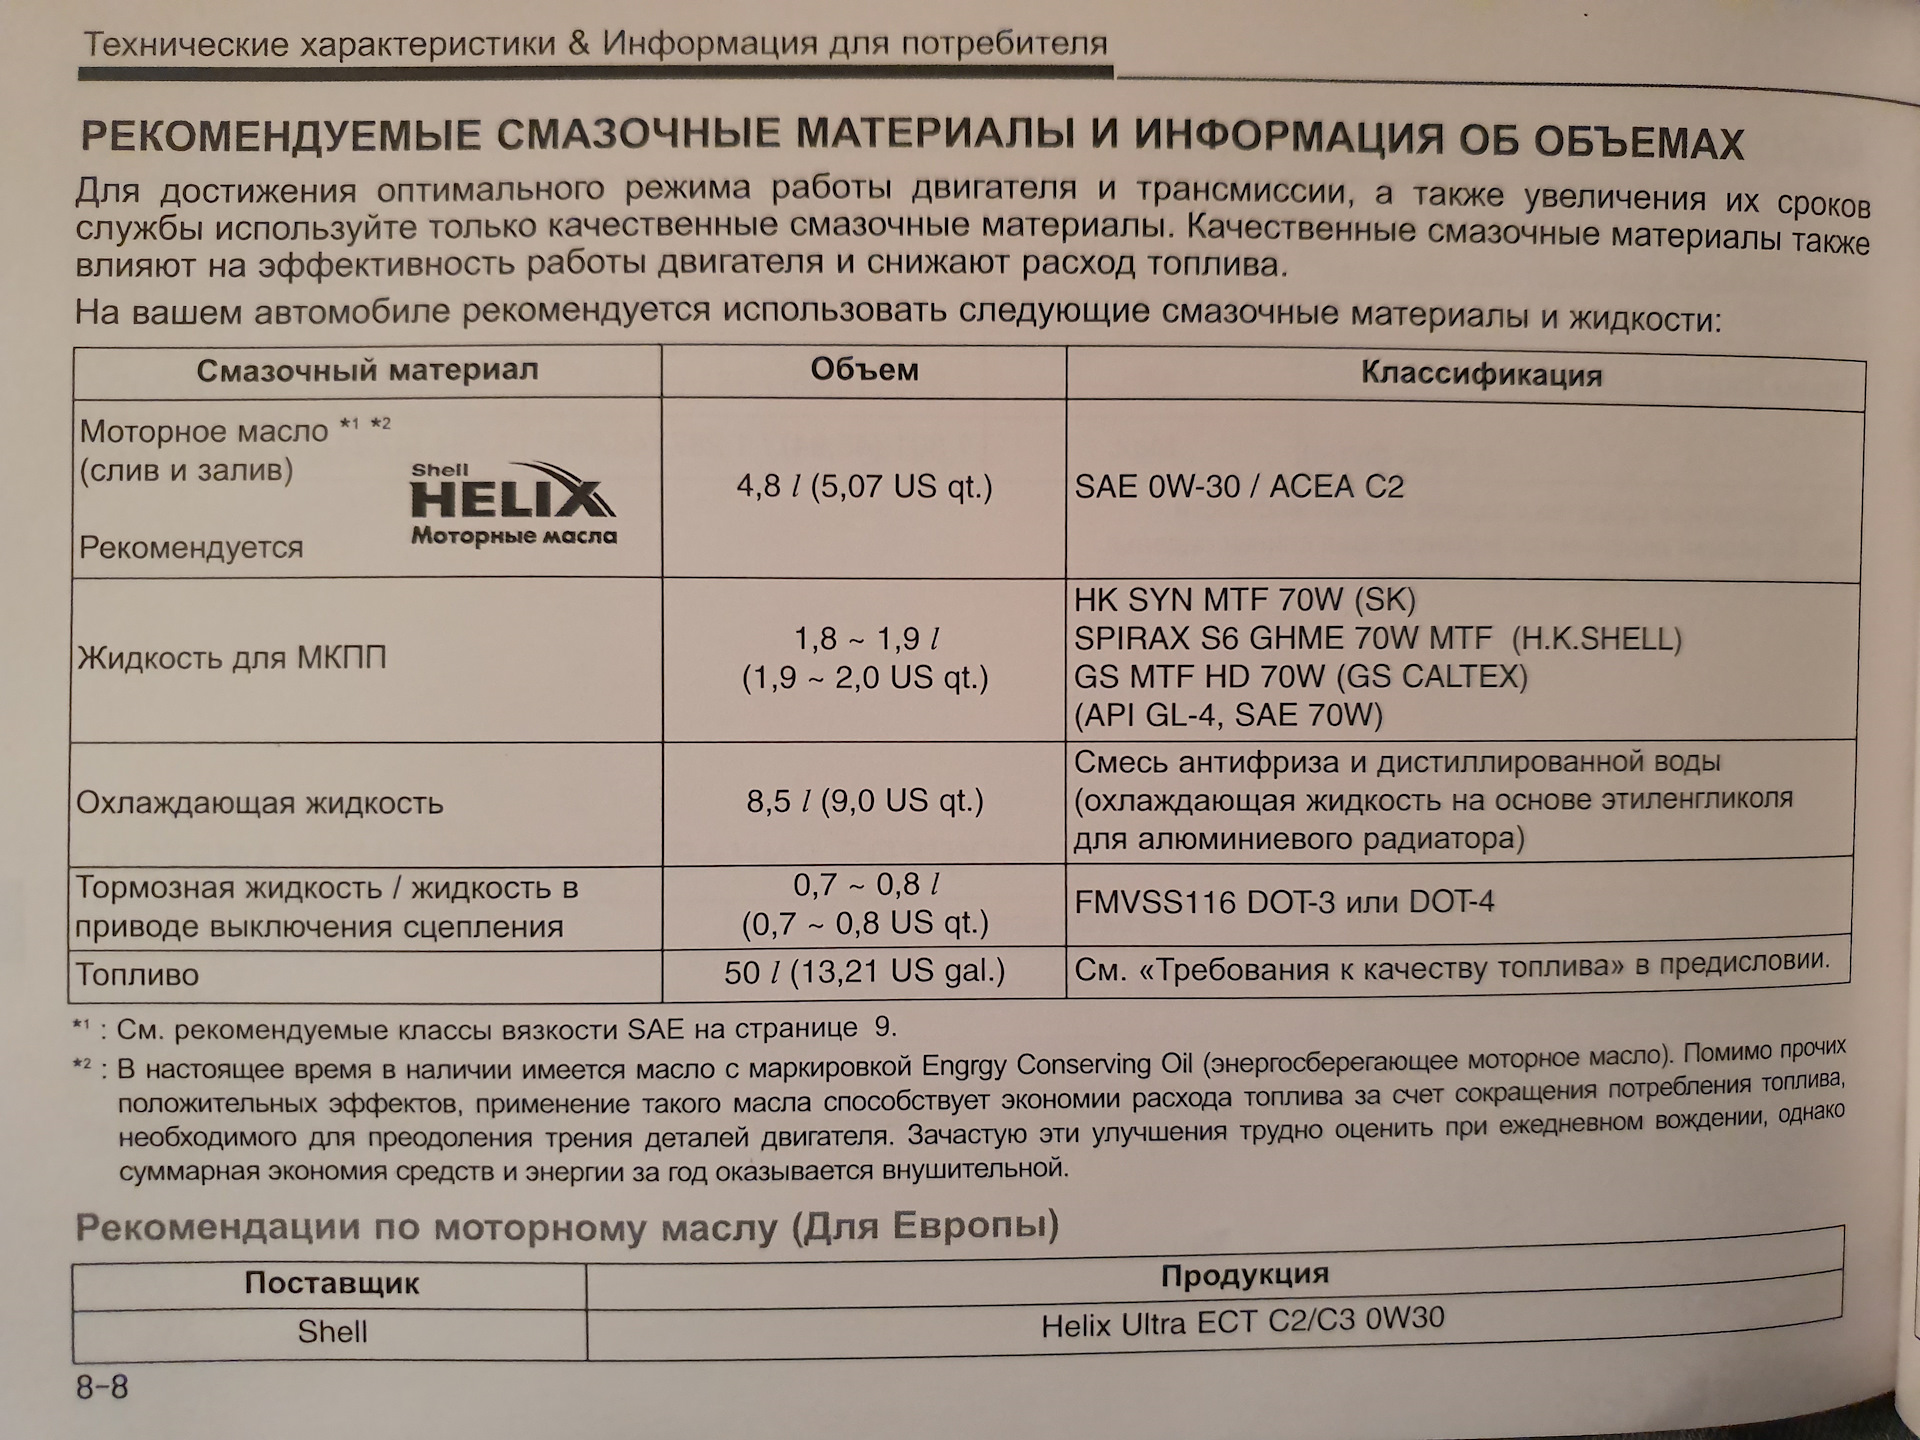 Количество масла хендай. Допуски масла для Хендай Солярис 1.6. Solaris Hyundai 2015 допуски масла 1,6. Допуски моторного масла Хендай i30 1,6. Solaris 1.6 масло в двигатель допуски.